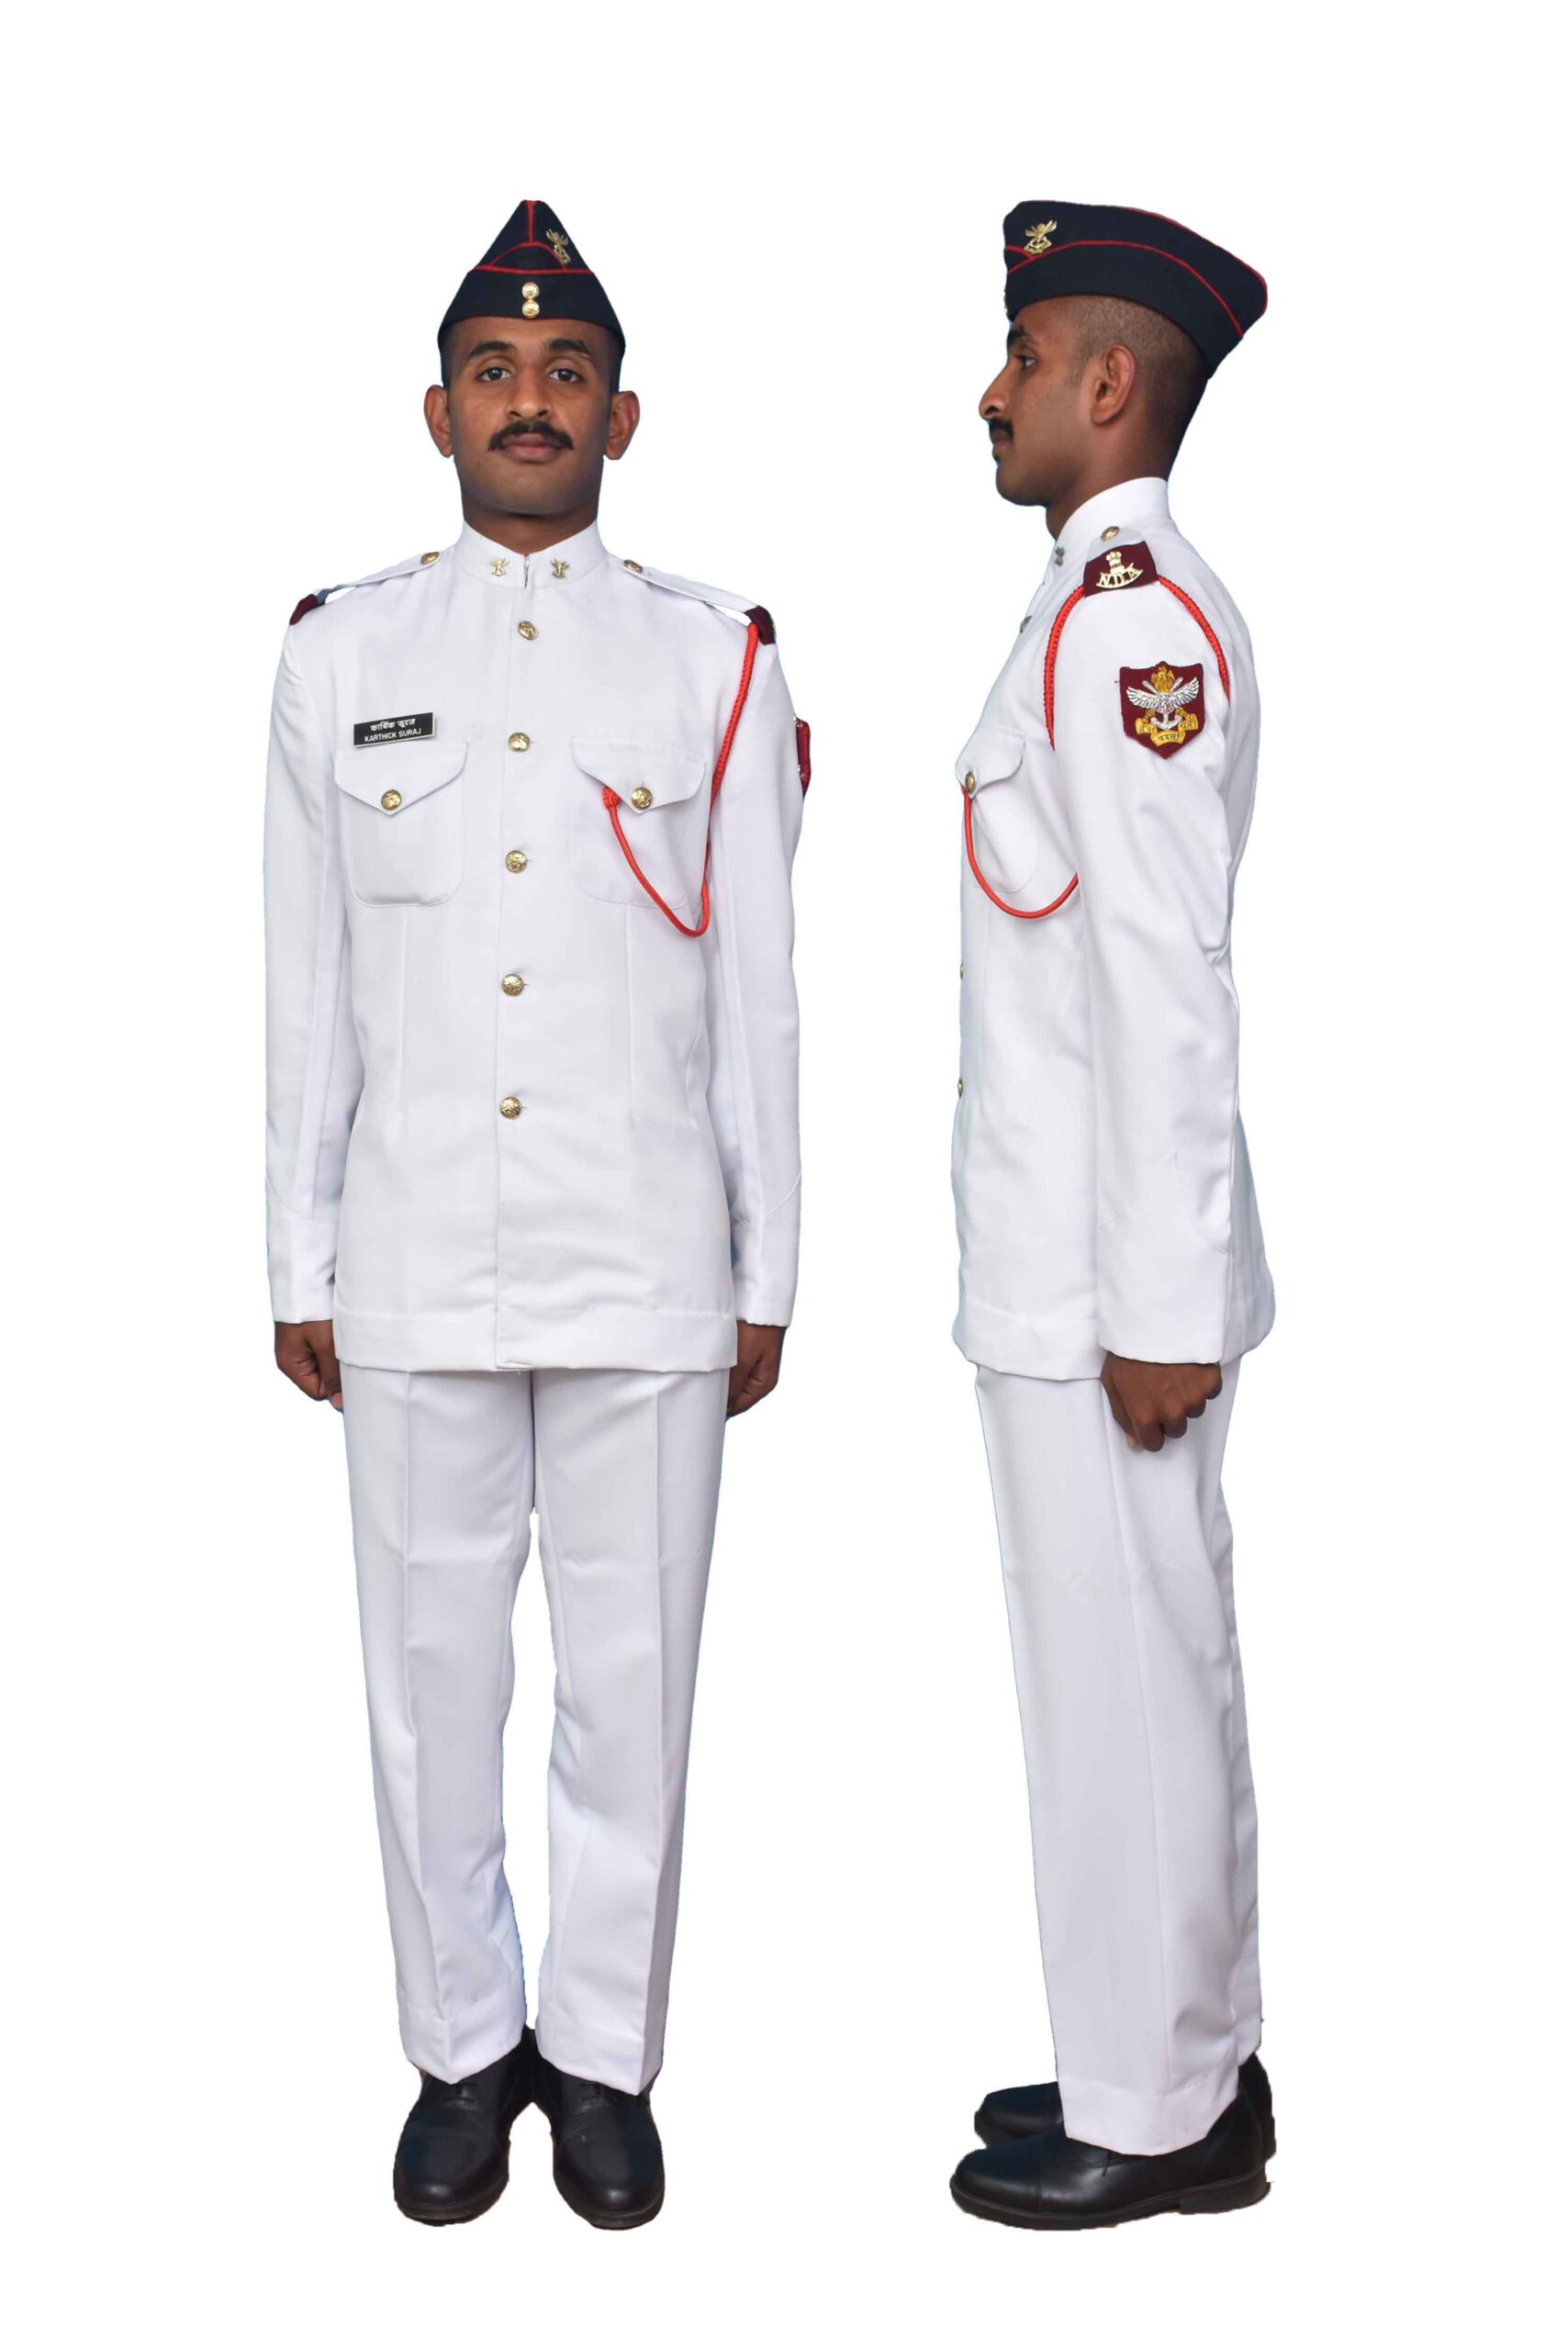 NDA Uniforms